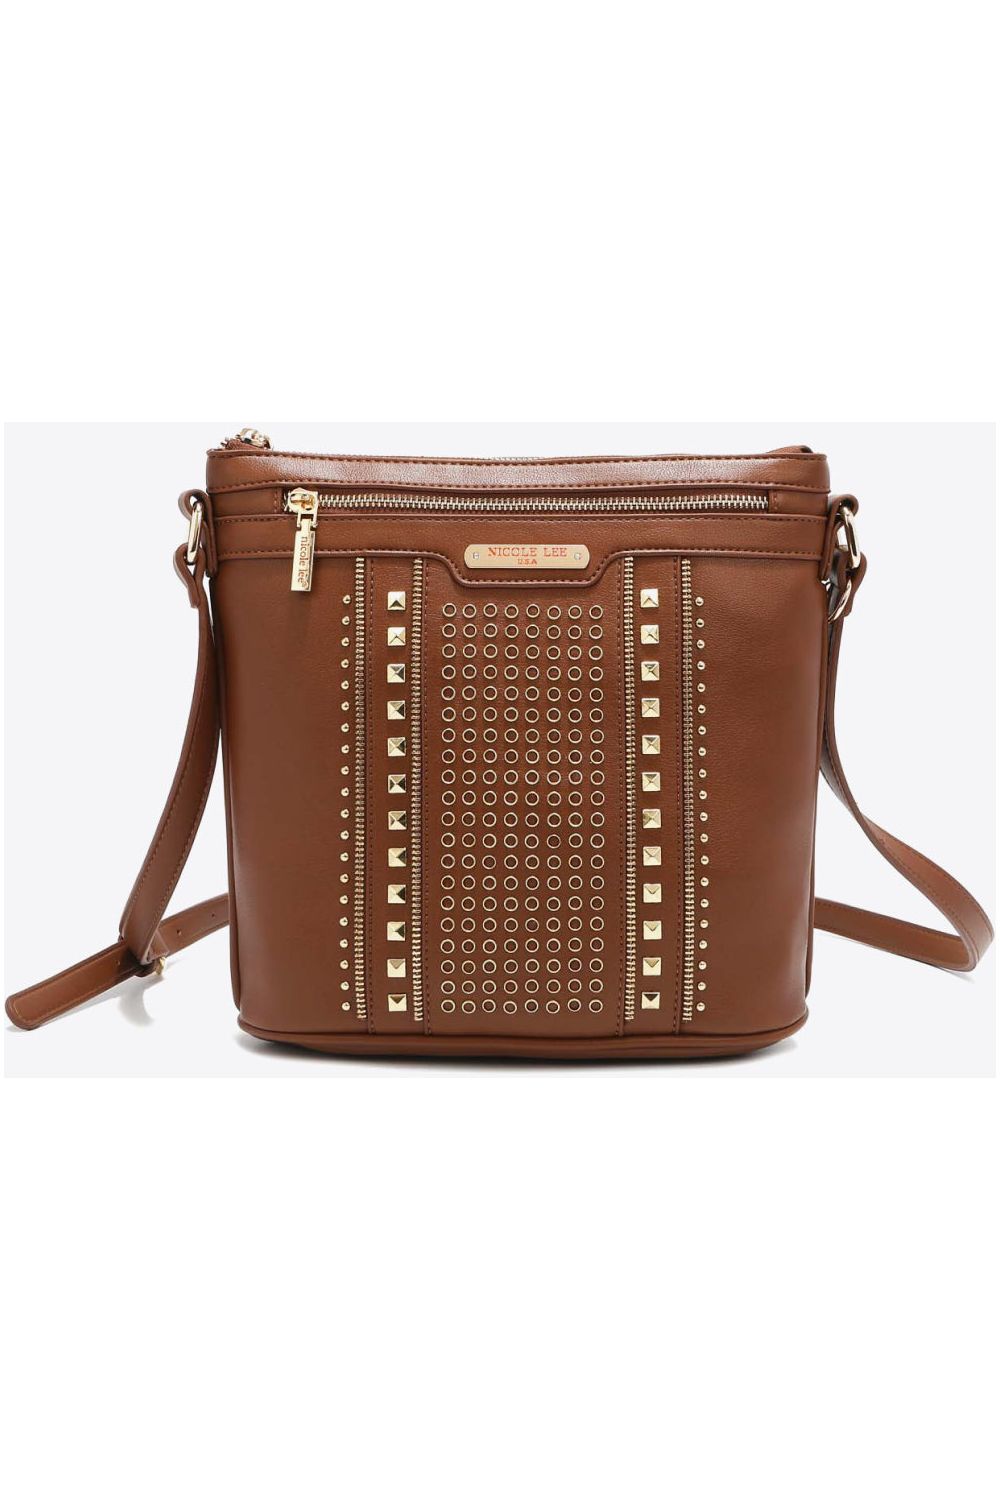 Women Nicole Lee USA Love Handbag - NicholesGifts.online